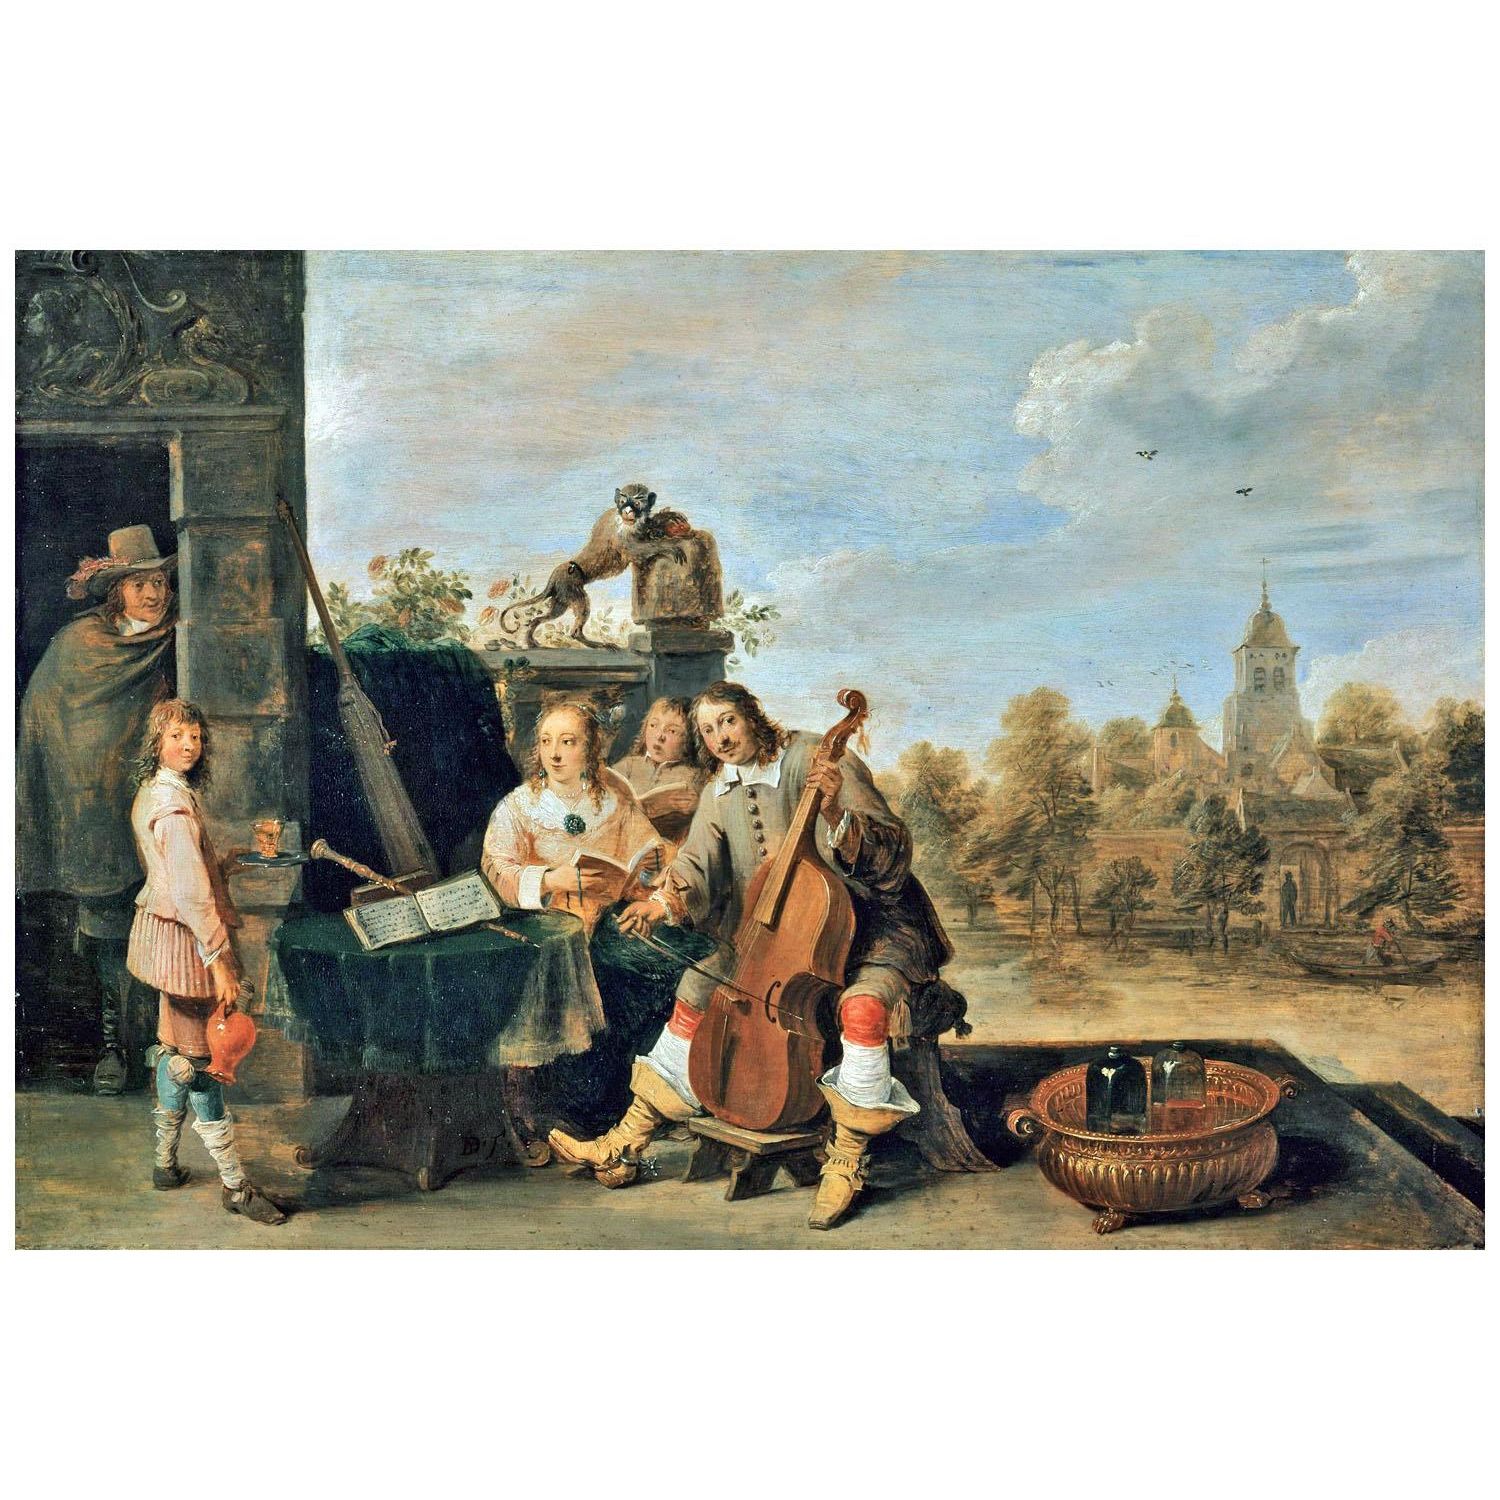 David Teniers II. The Artist and His Family. 1645. Gemaldegalerie Berlin